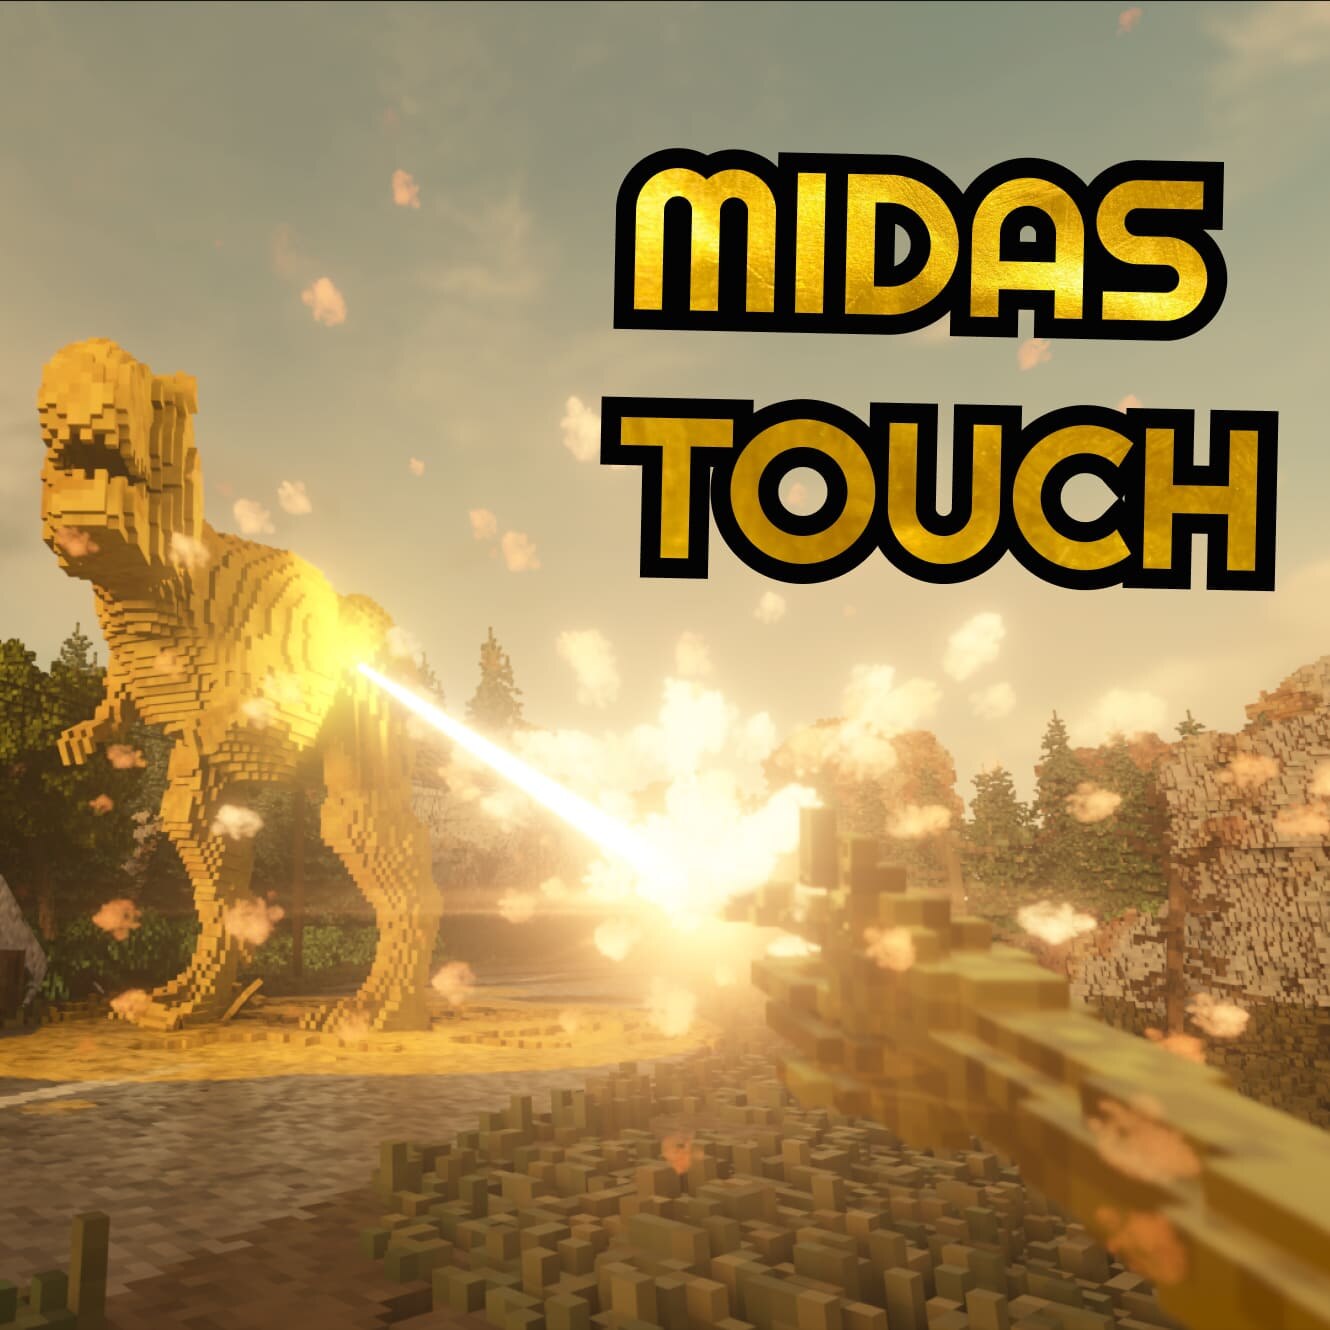 The Midas touch : r/noita